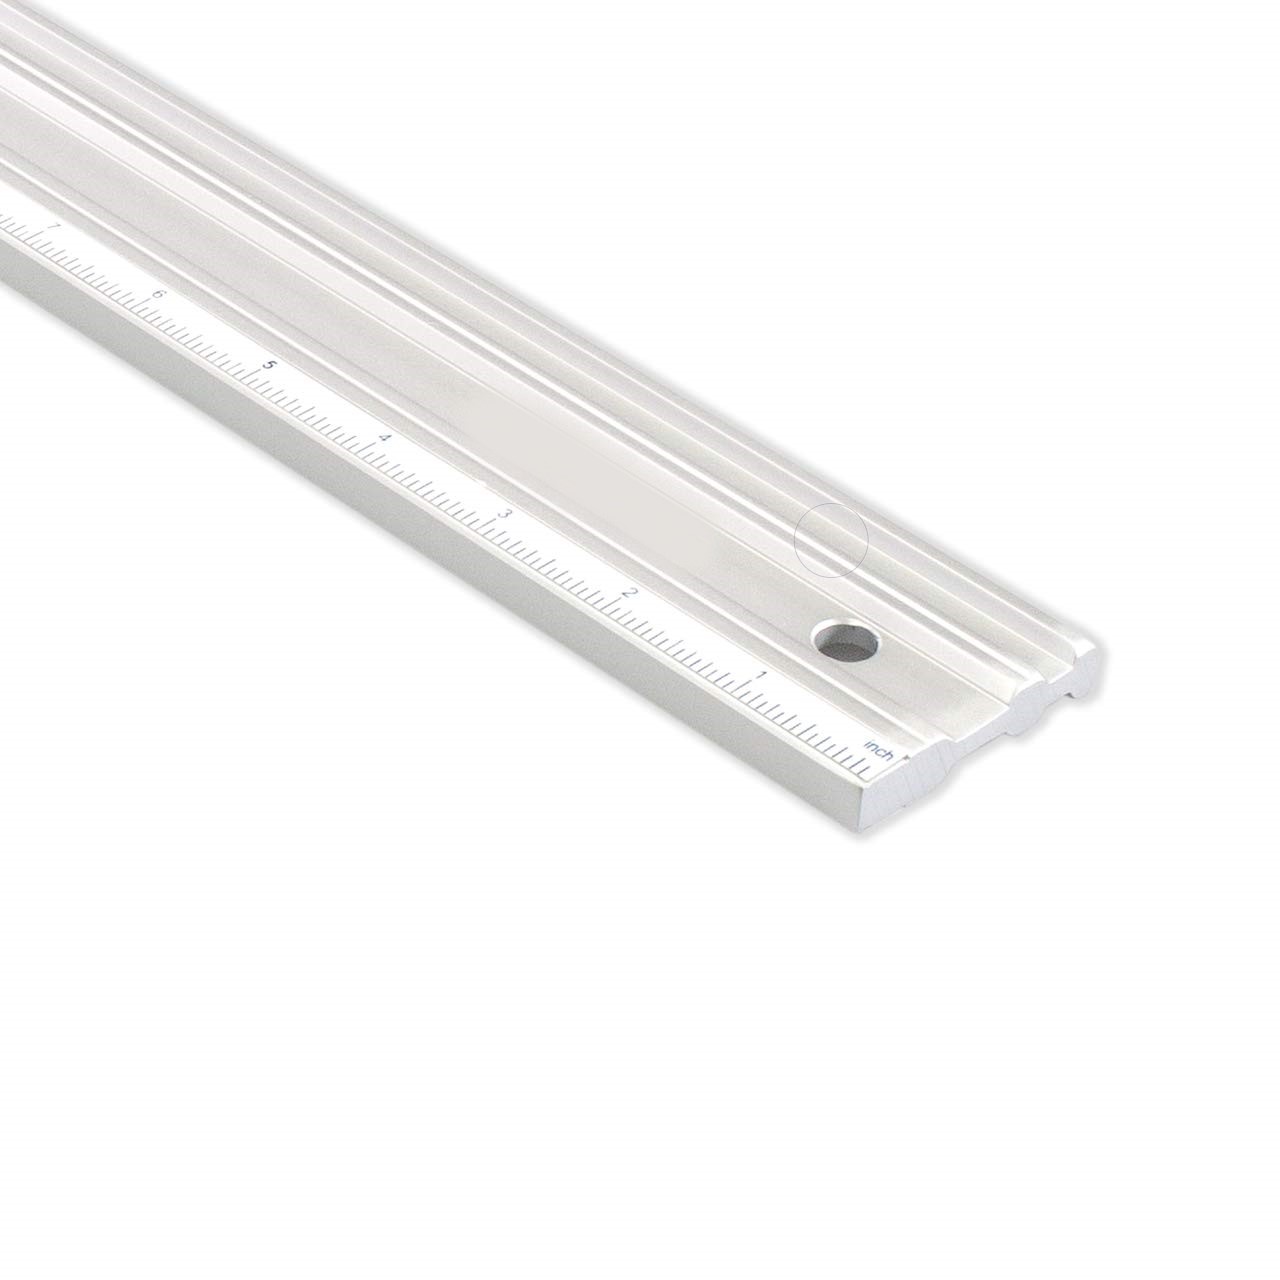 Aluminum Straight-Edge Ruler - Avanti Systems Co. Ltd